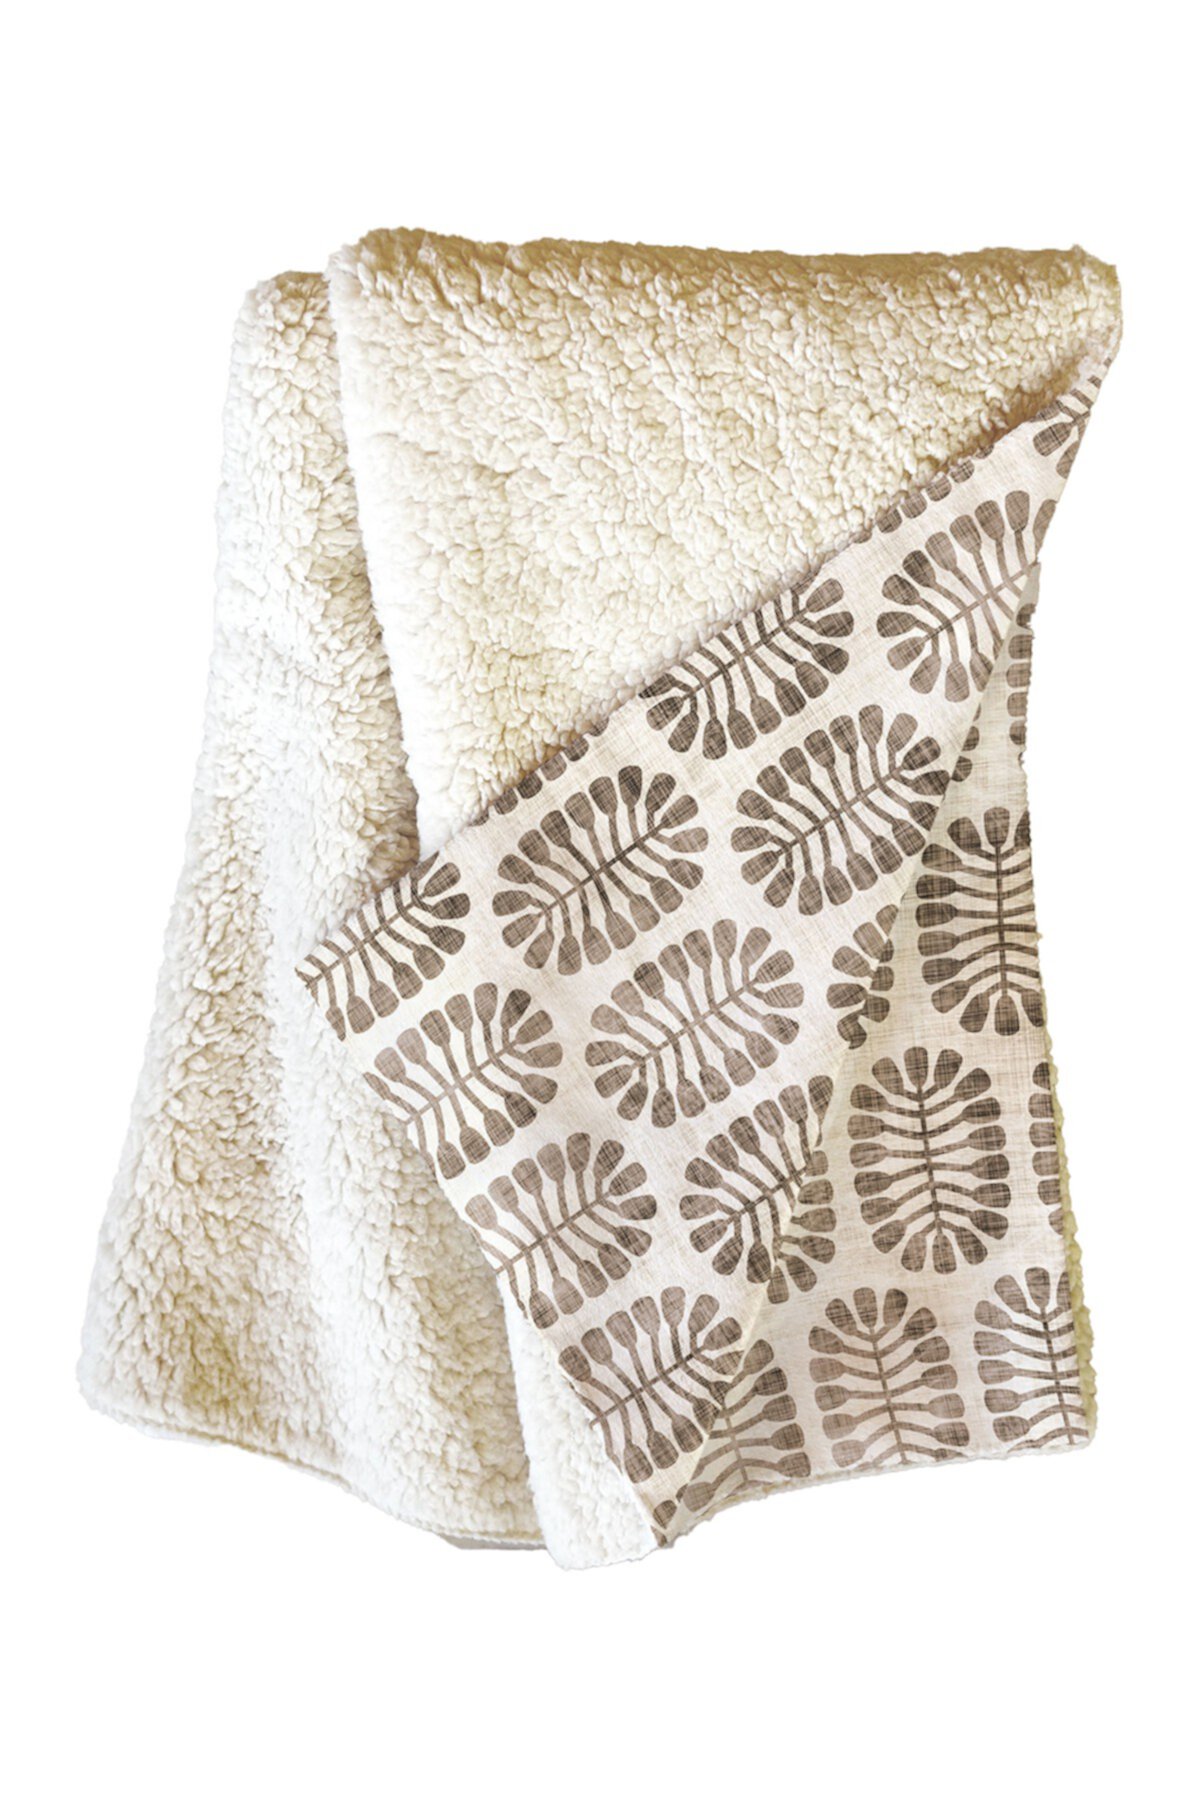 Holli Zollinger Флисовое одеяло с семенами чертополоха Deny Designs